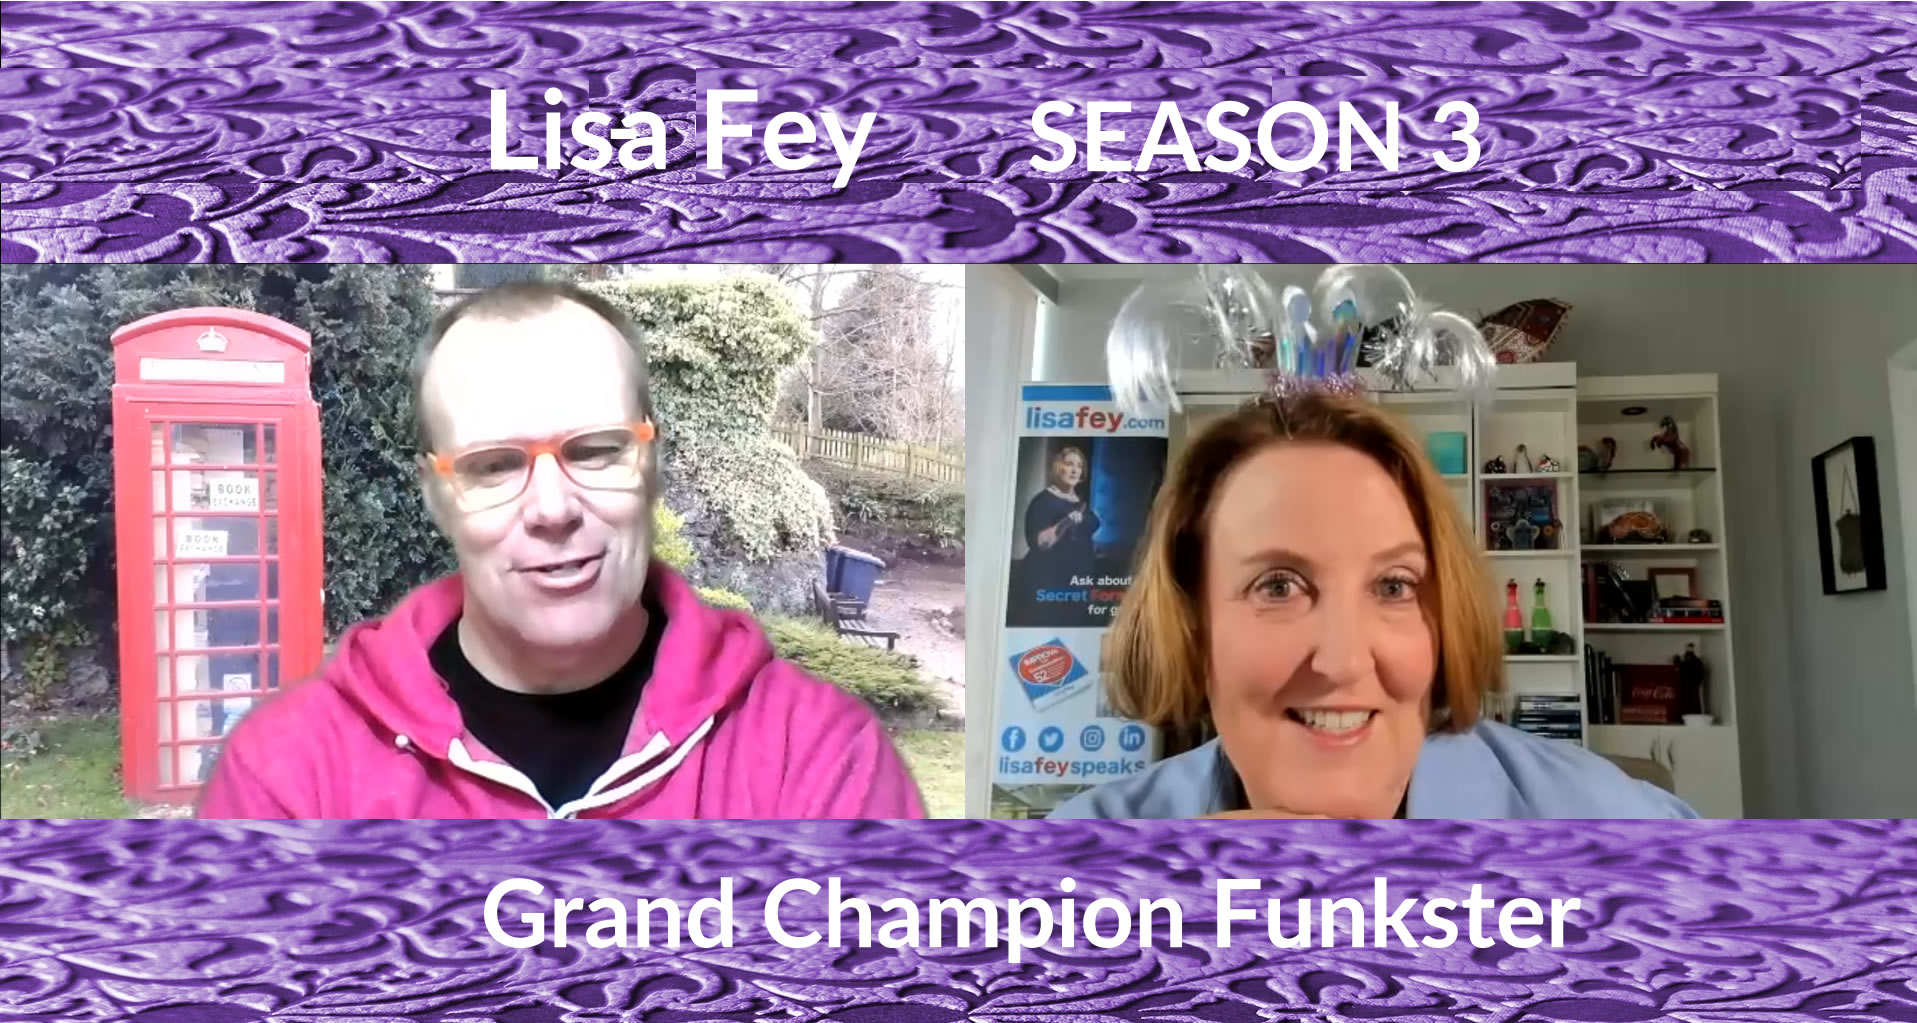 Lisa Fey FunkQuest Season 3 Grand Champion